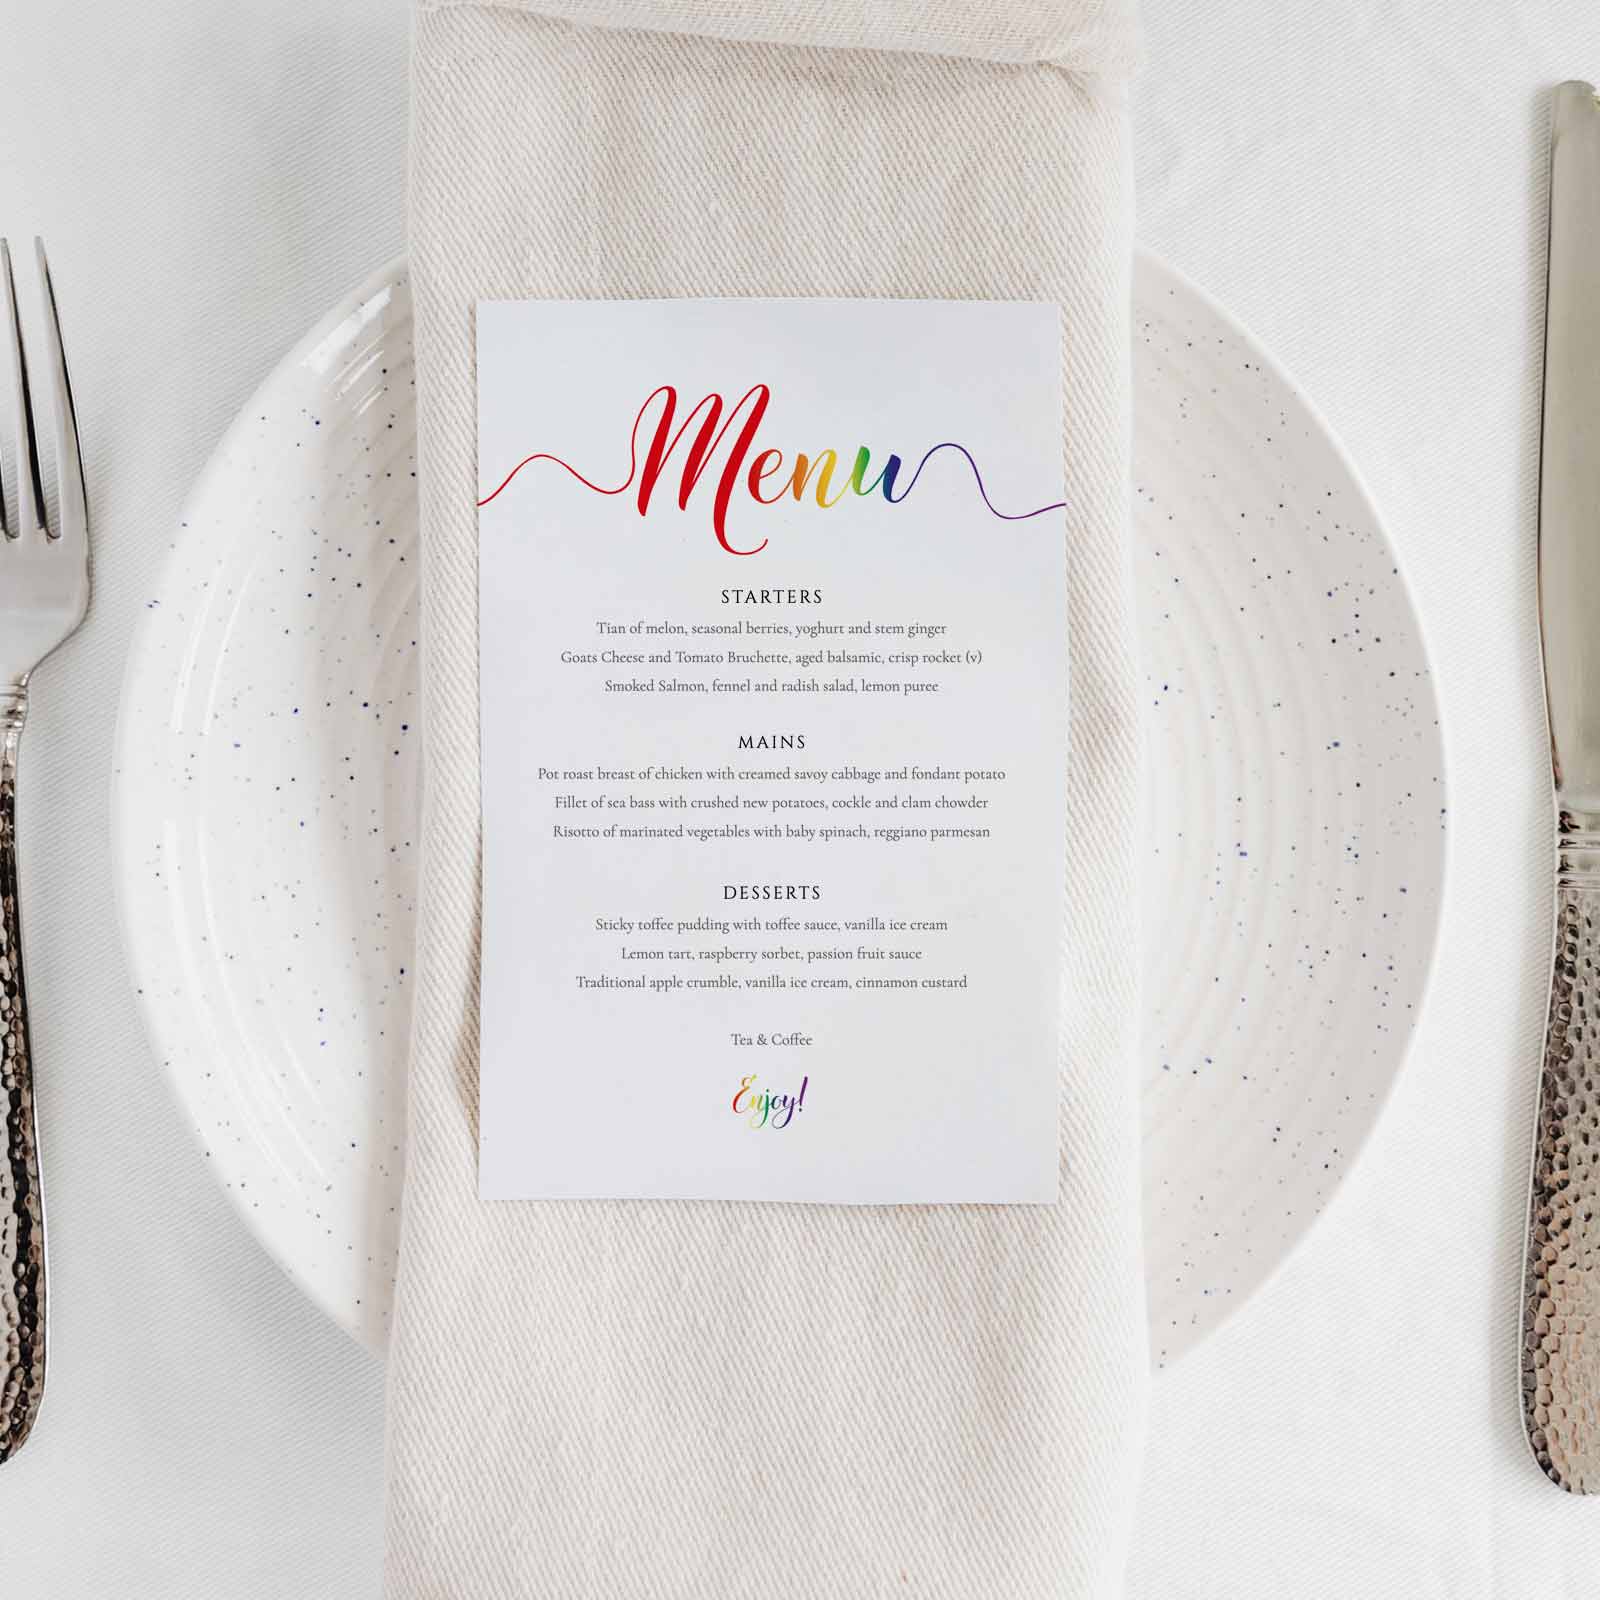 pride rainbow table menu at a lesbian wedding